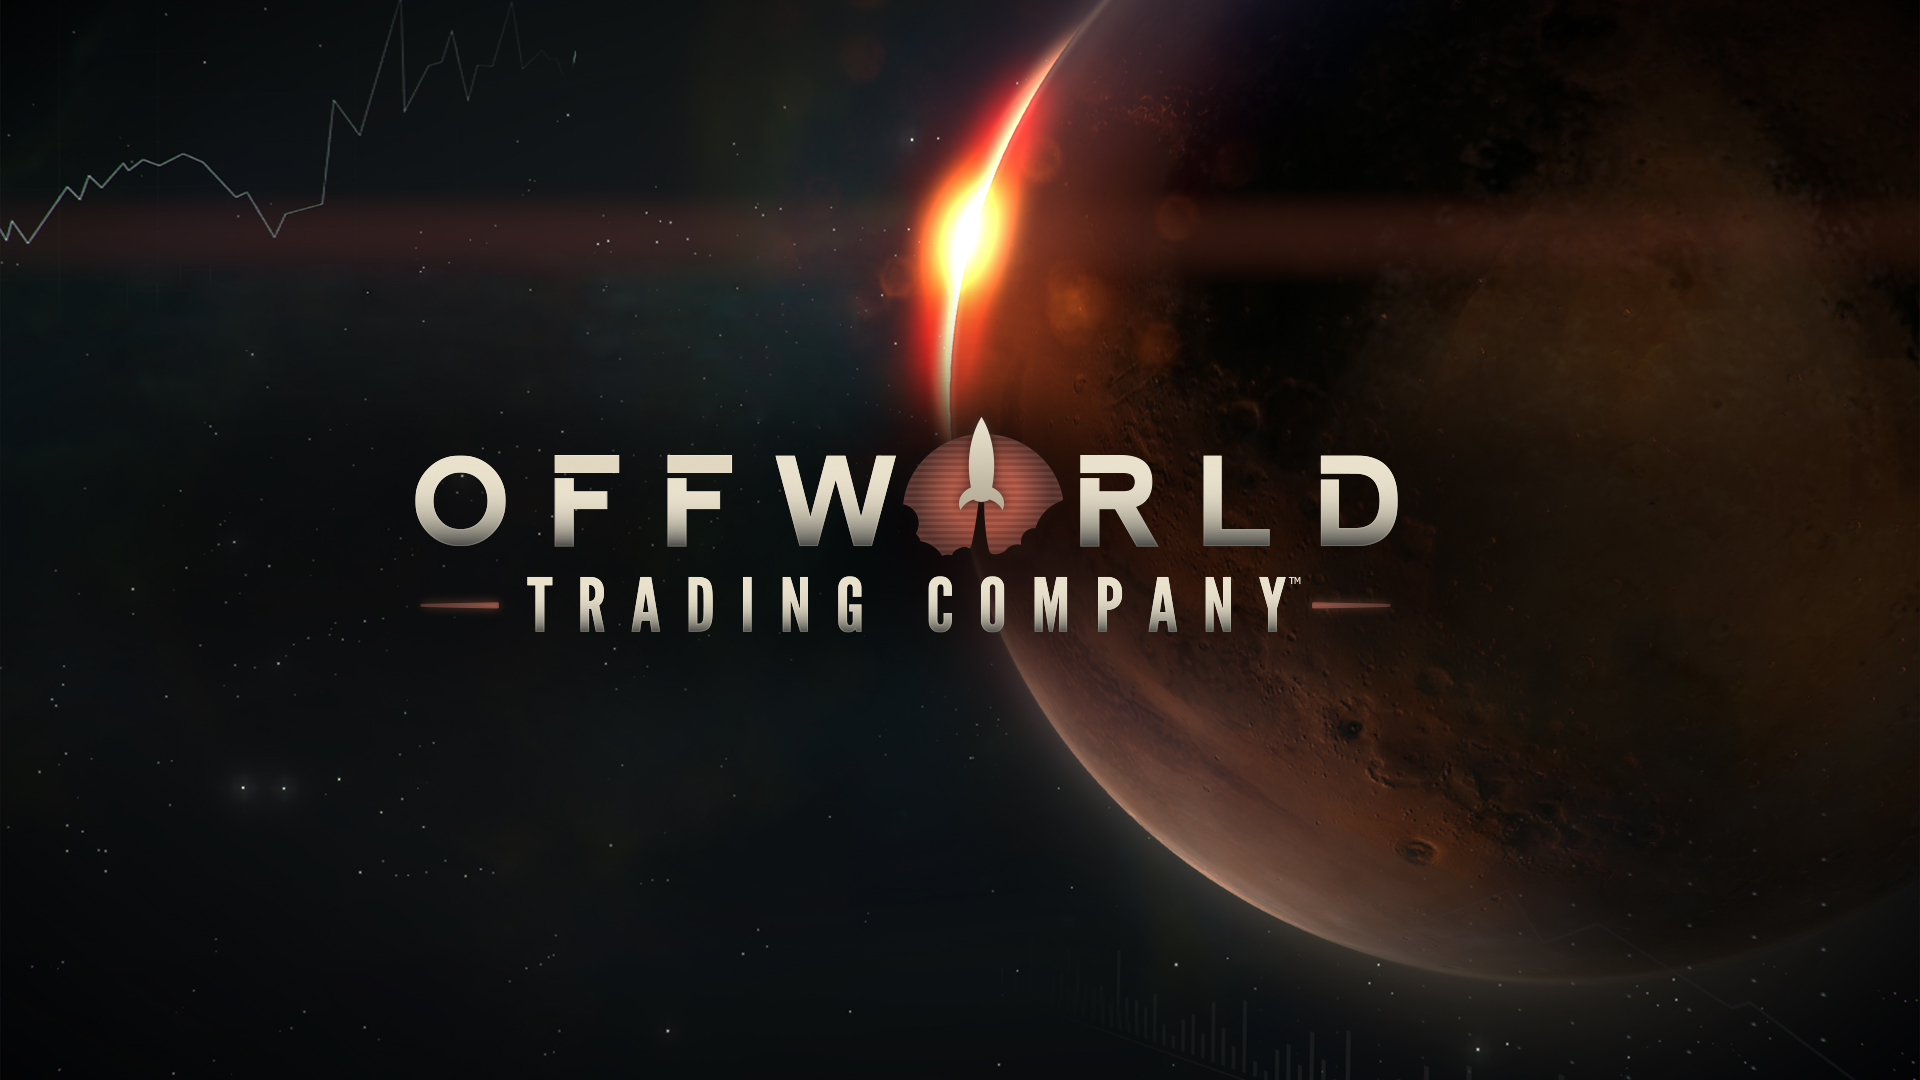 “Offworld Trading Company” (Early Access) - Early Access, Shmerly Access!